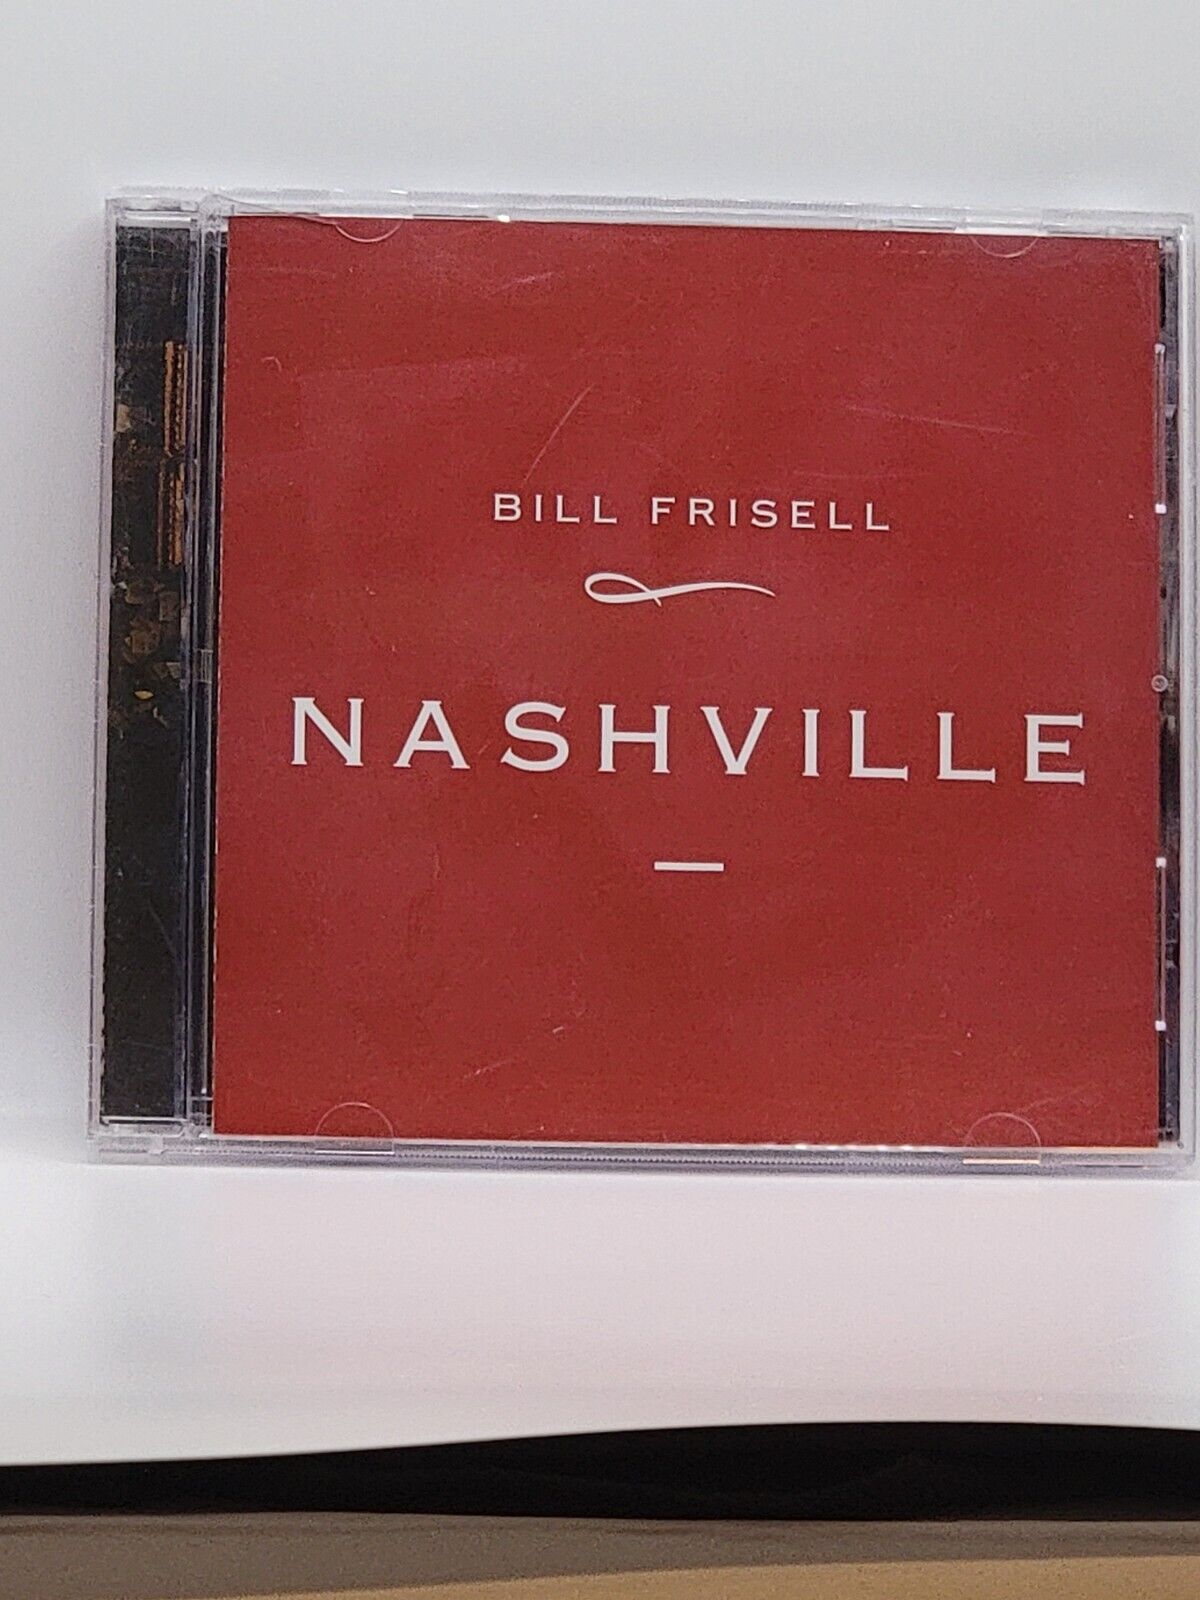 Nashville by Bill Frisell (CD, Apr-1997, Elektra (Label))